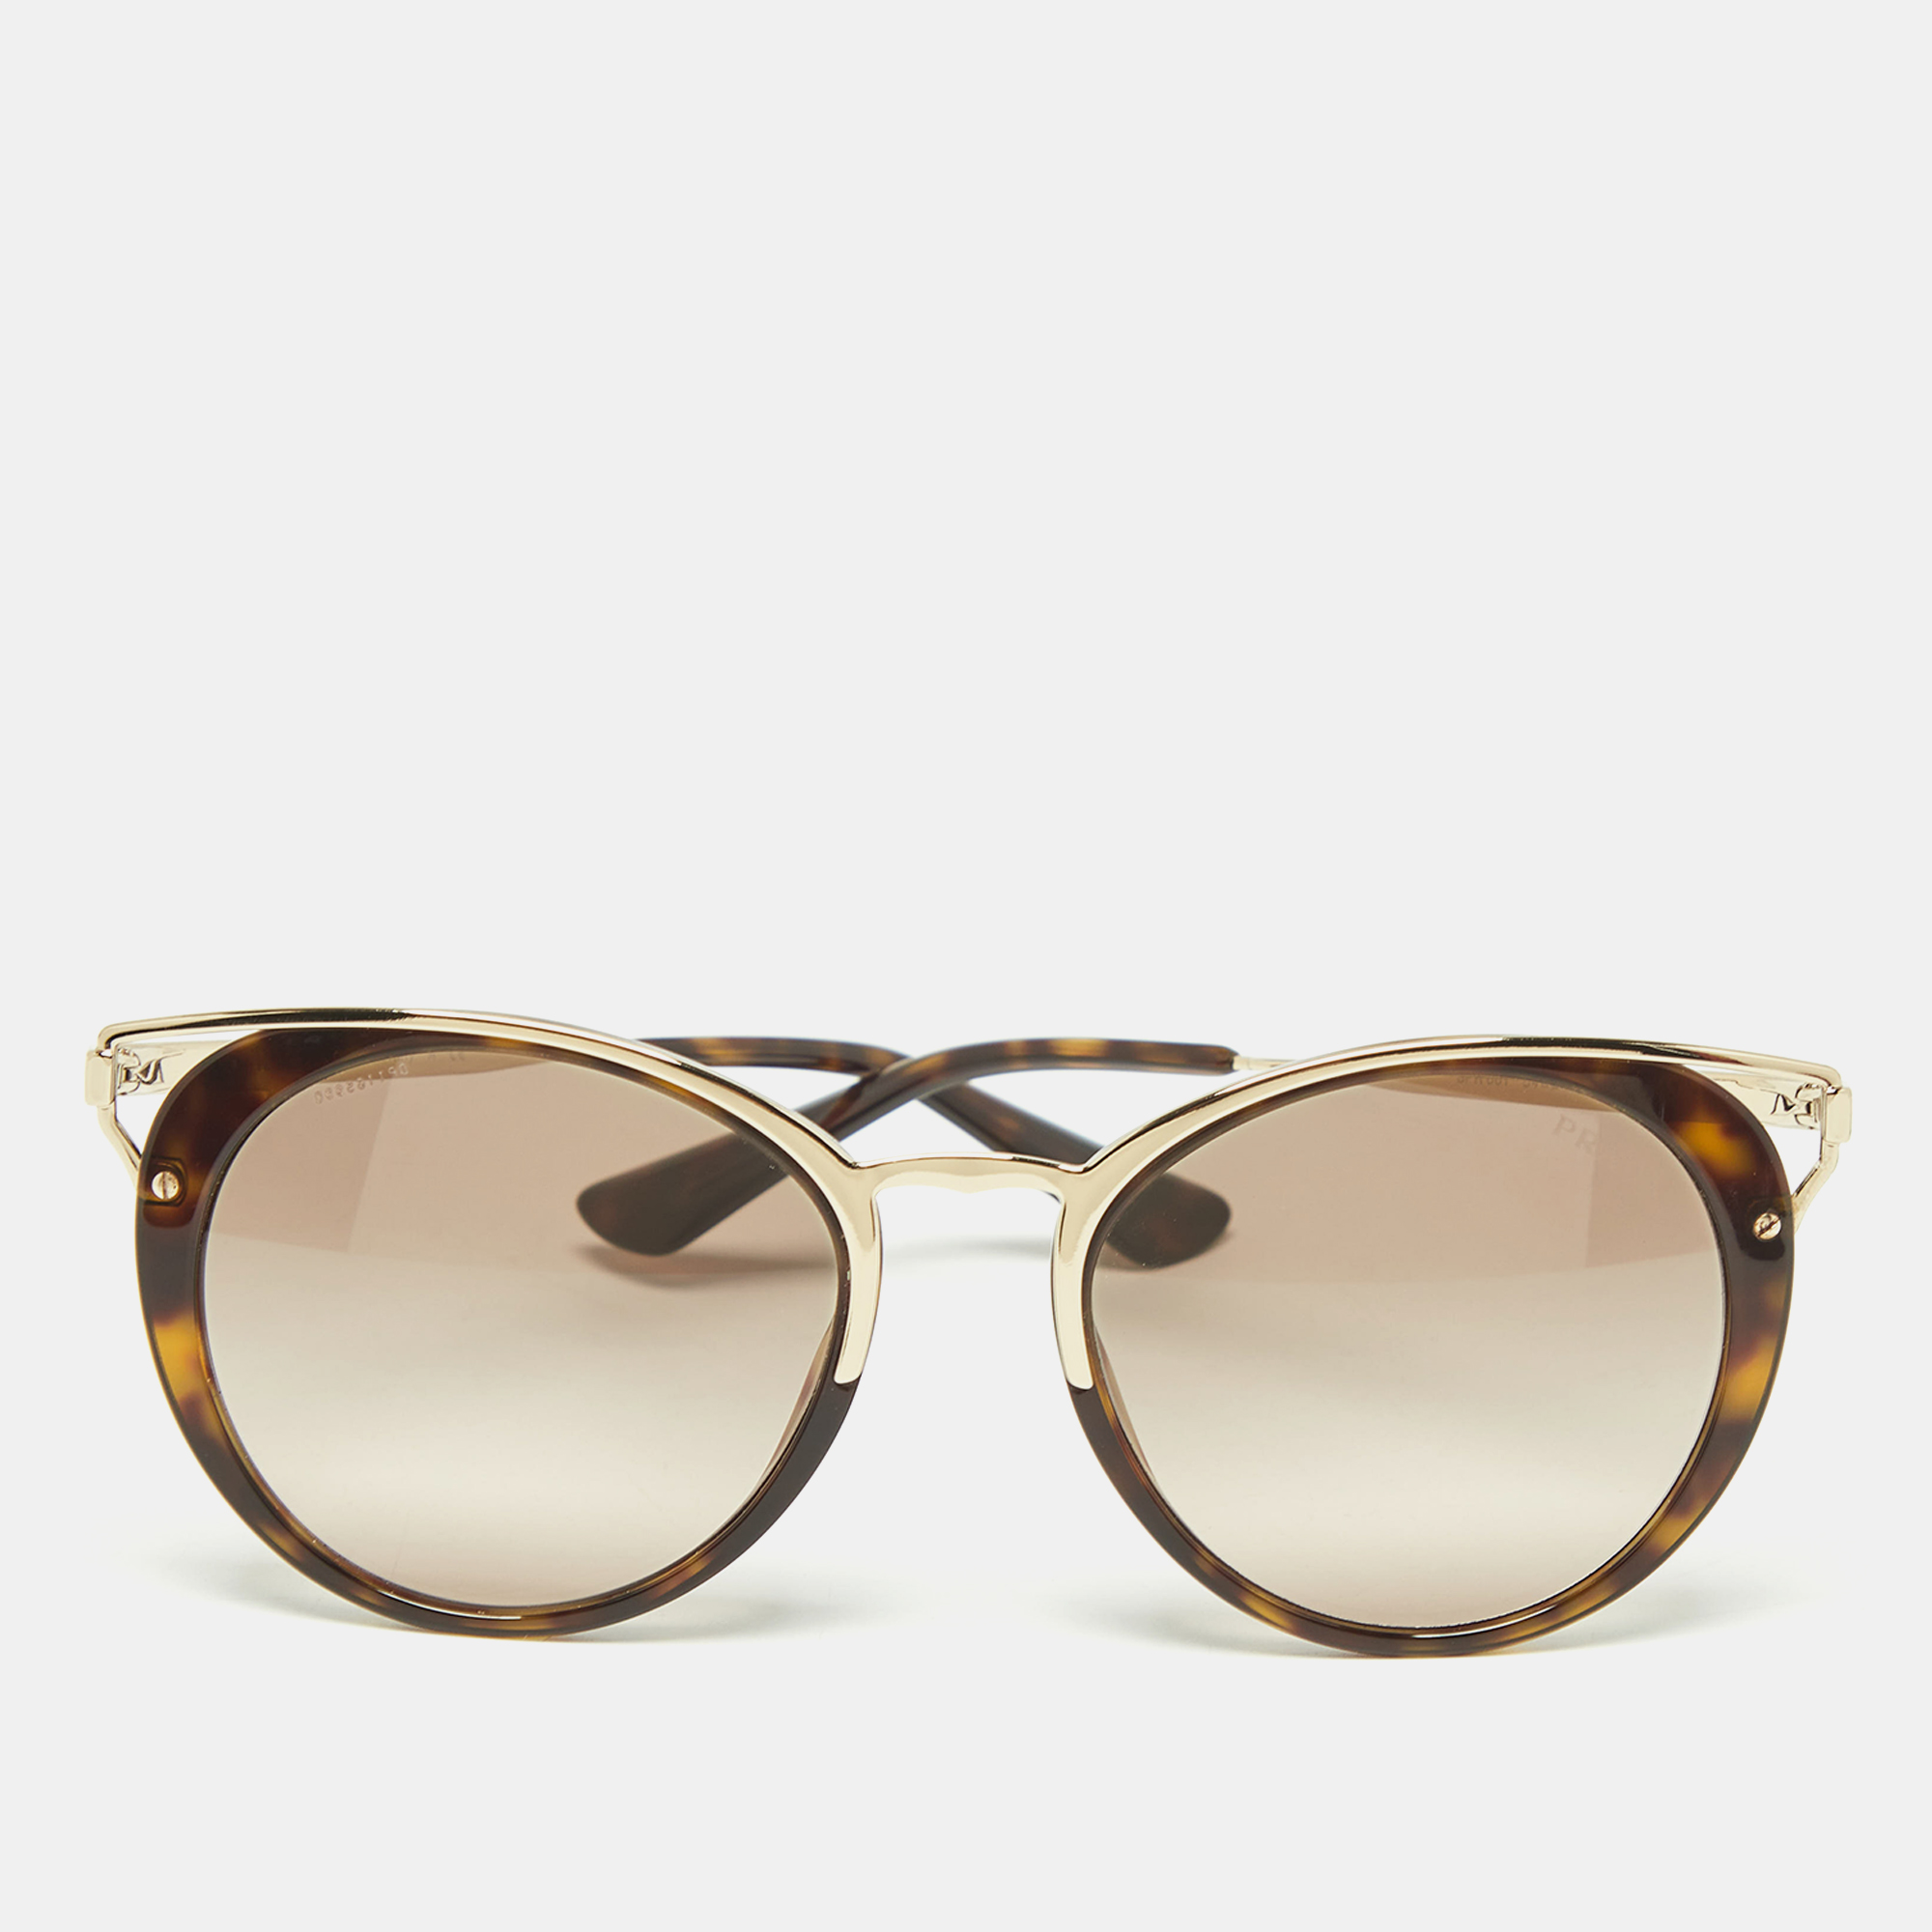 Prada brown/gold tortoise spr66t cat eye sunglasses